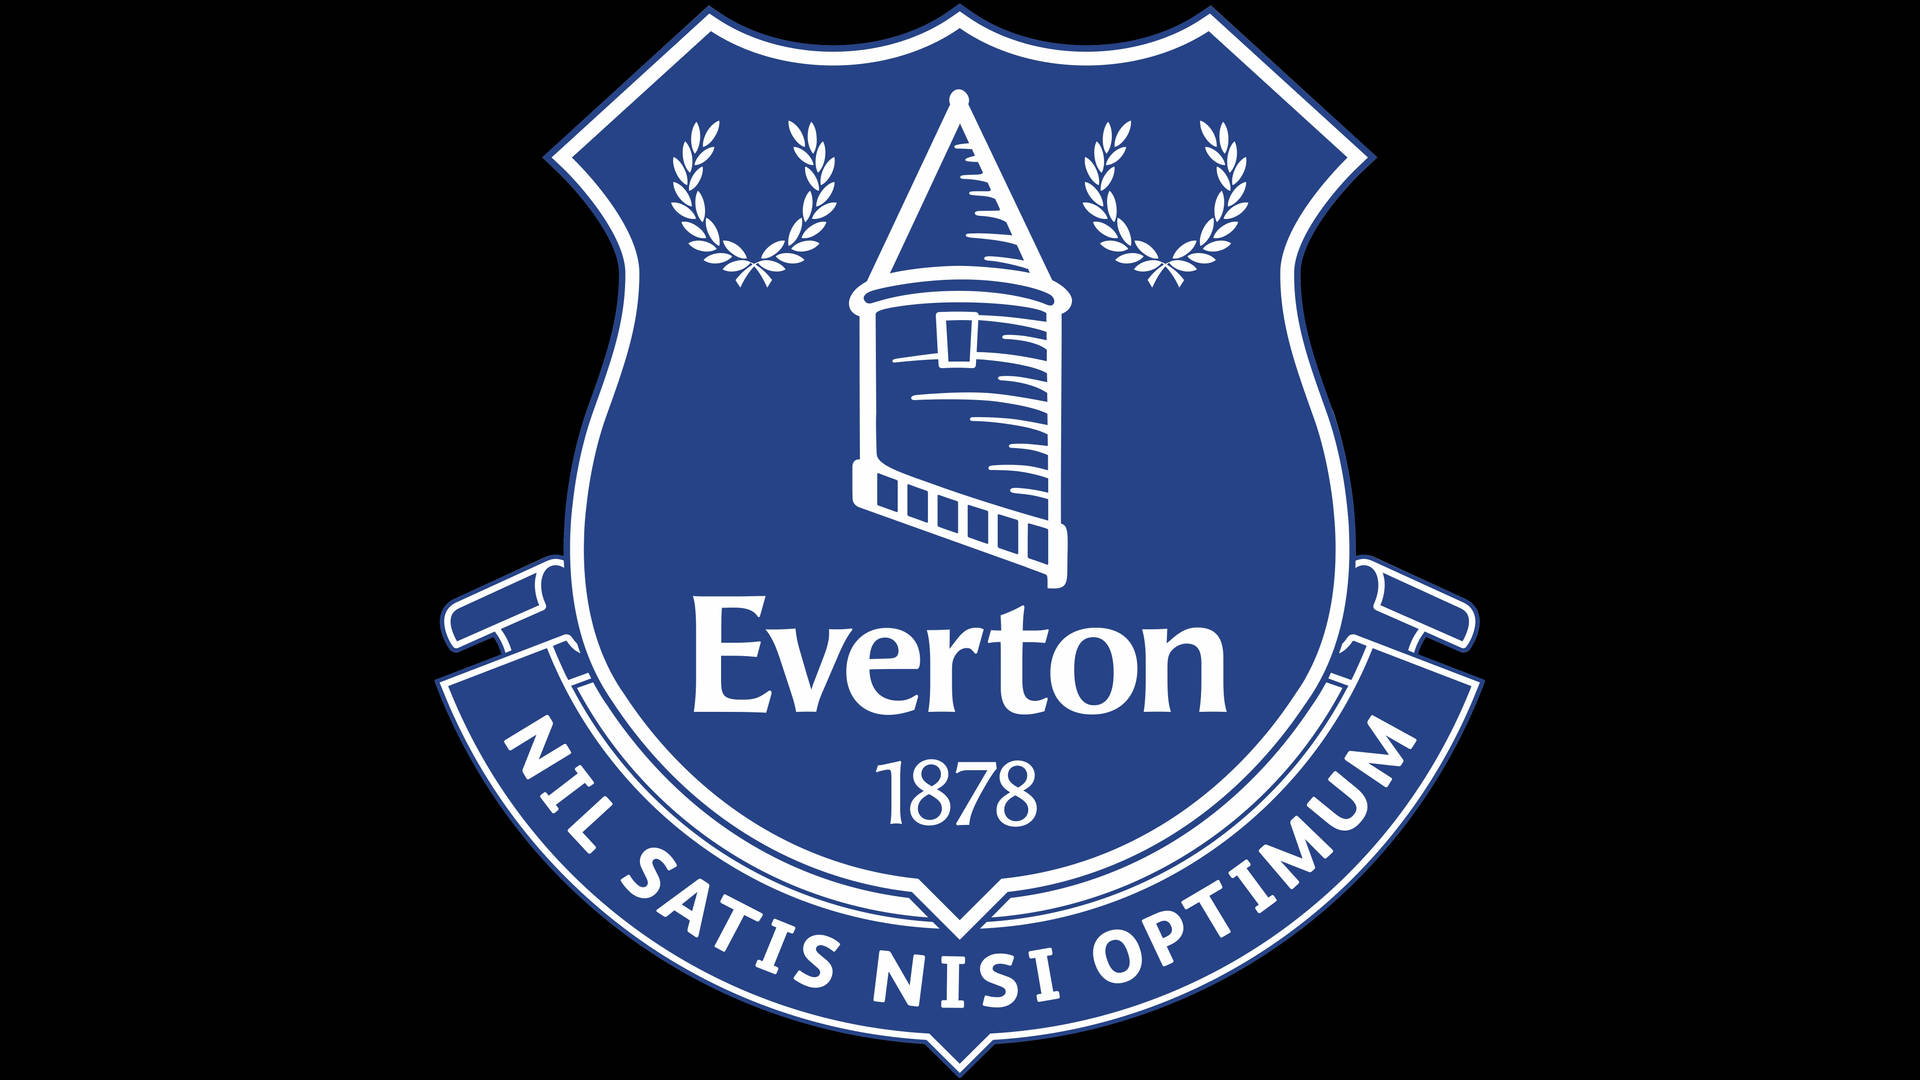 Evertonf.c. Das Schwarze Wappen Wallpaper